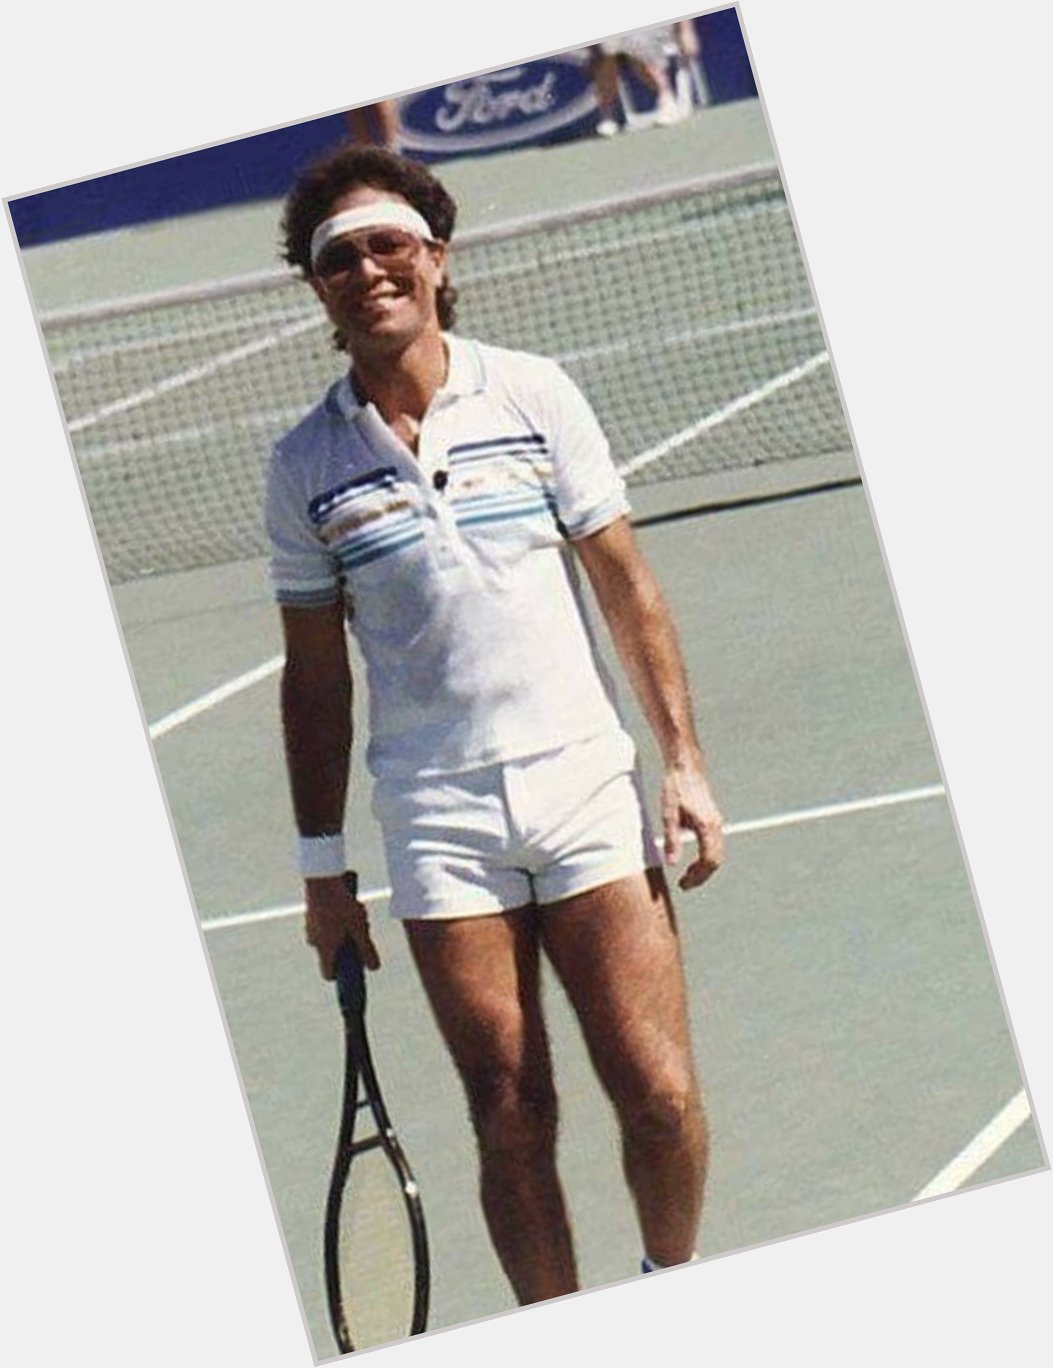 Happy Birthday American former World No 1 tennis player Billie Jean King 79 today. 